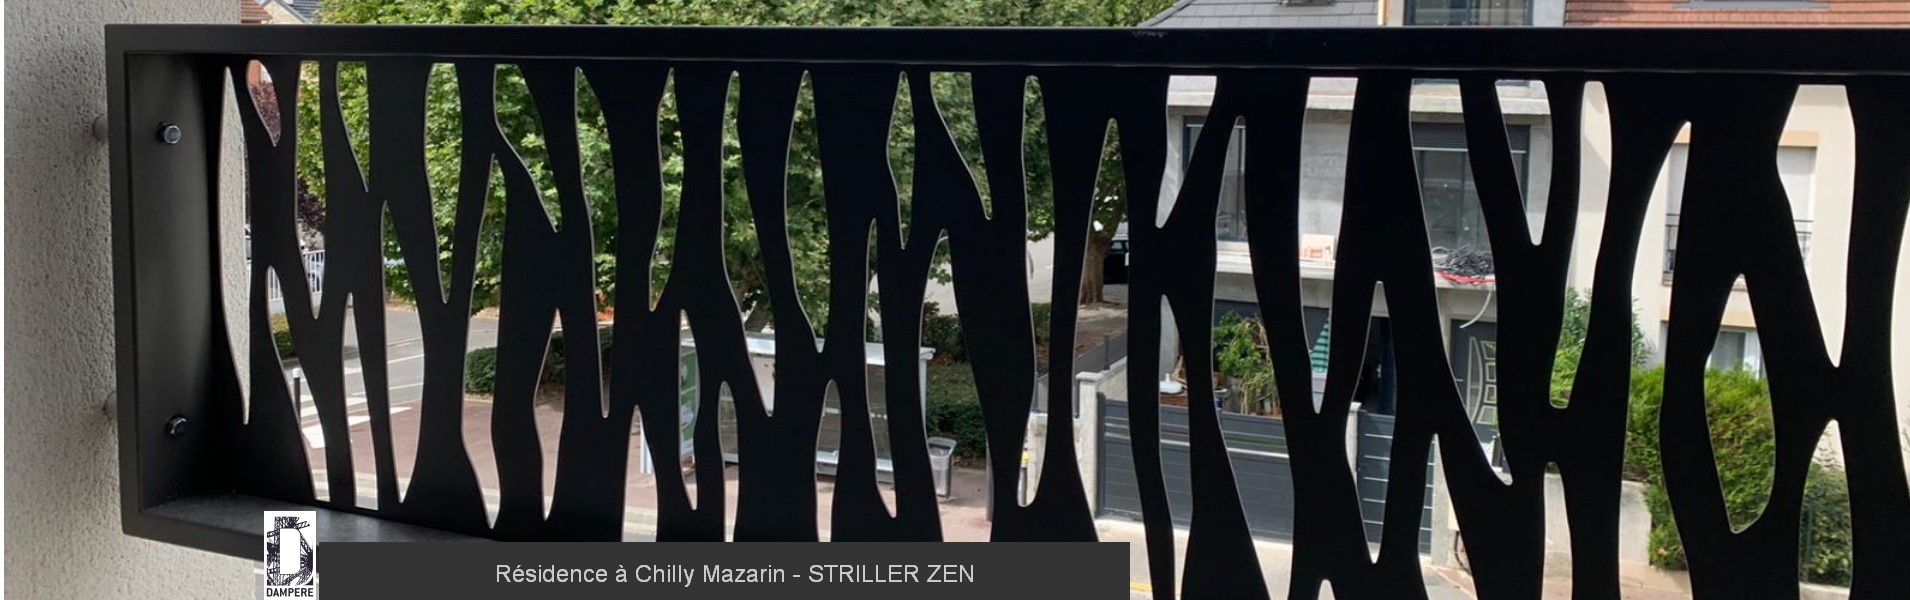 Residence a Chilly Mazarin STRILLER ZEN 9